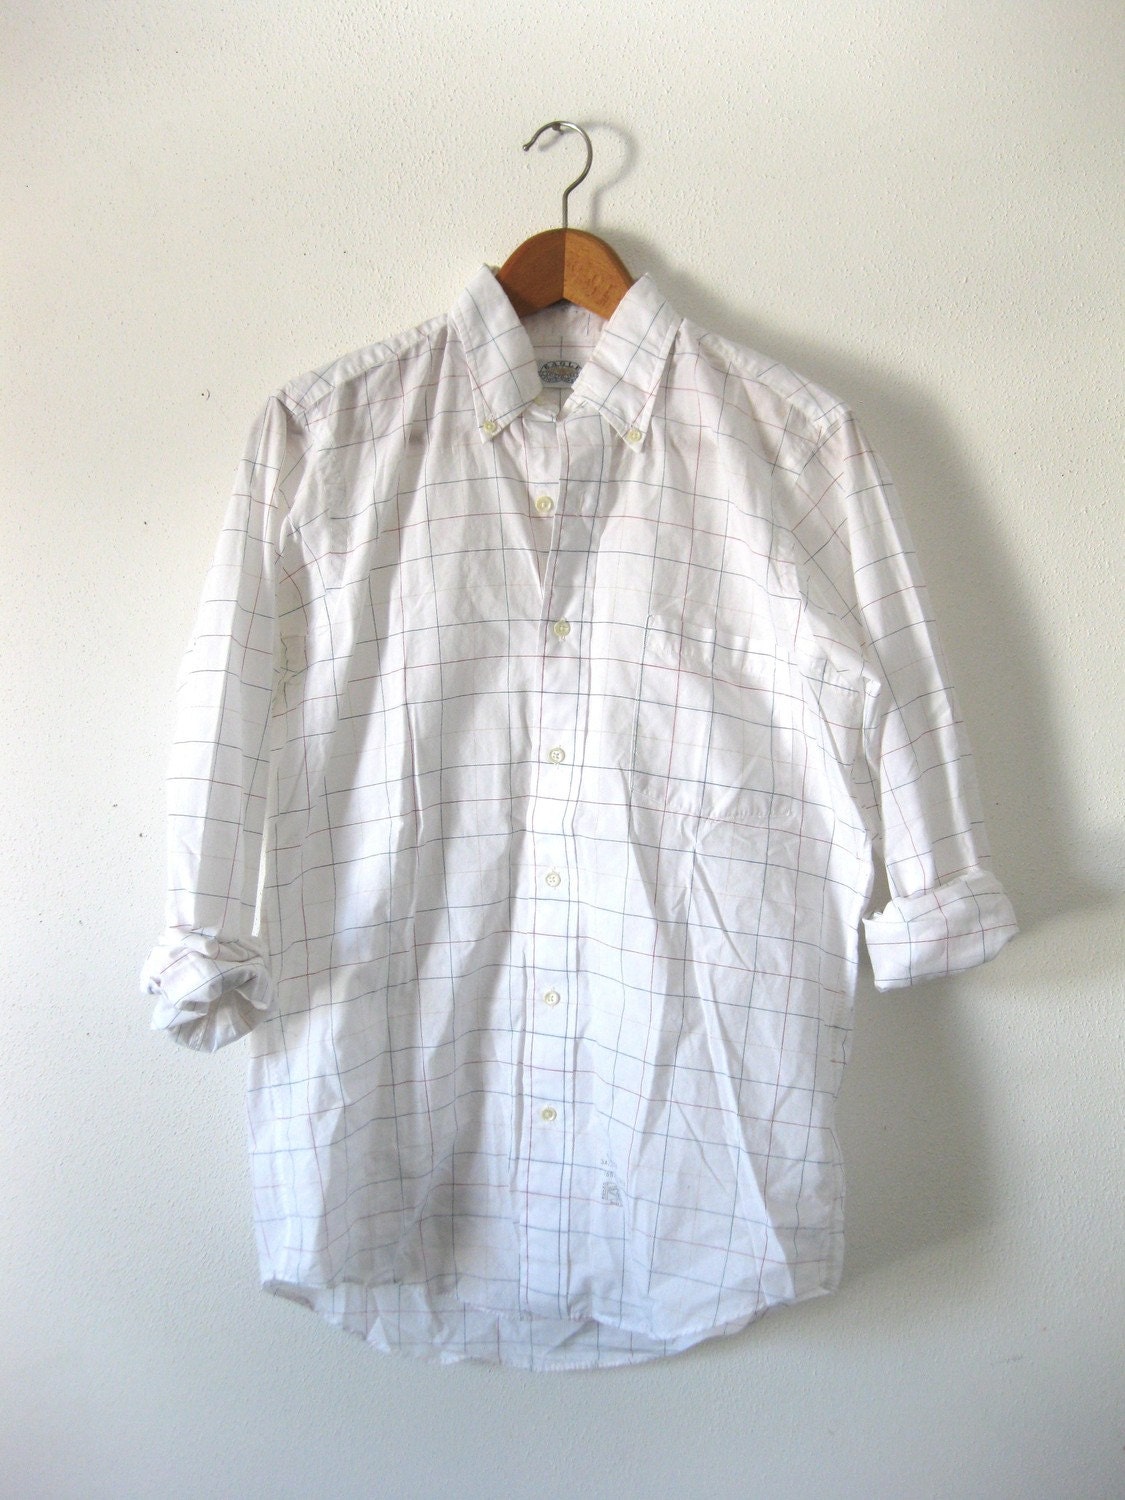 Vintage 80s 90s Classic White Shirt with Subtle Colorful Plaid Print